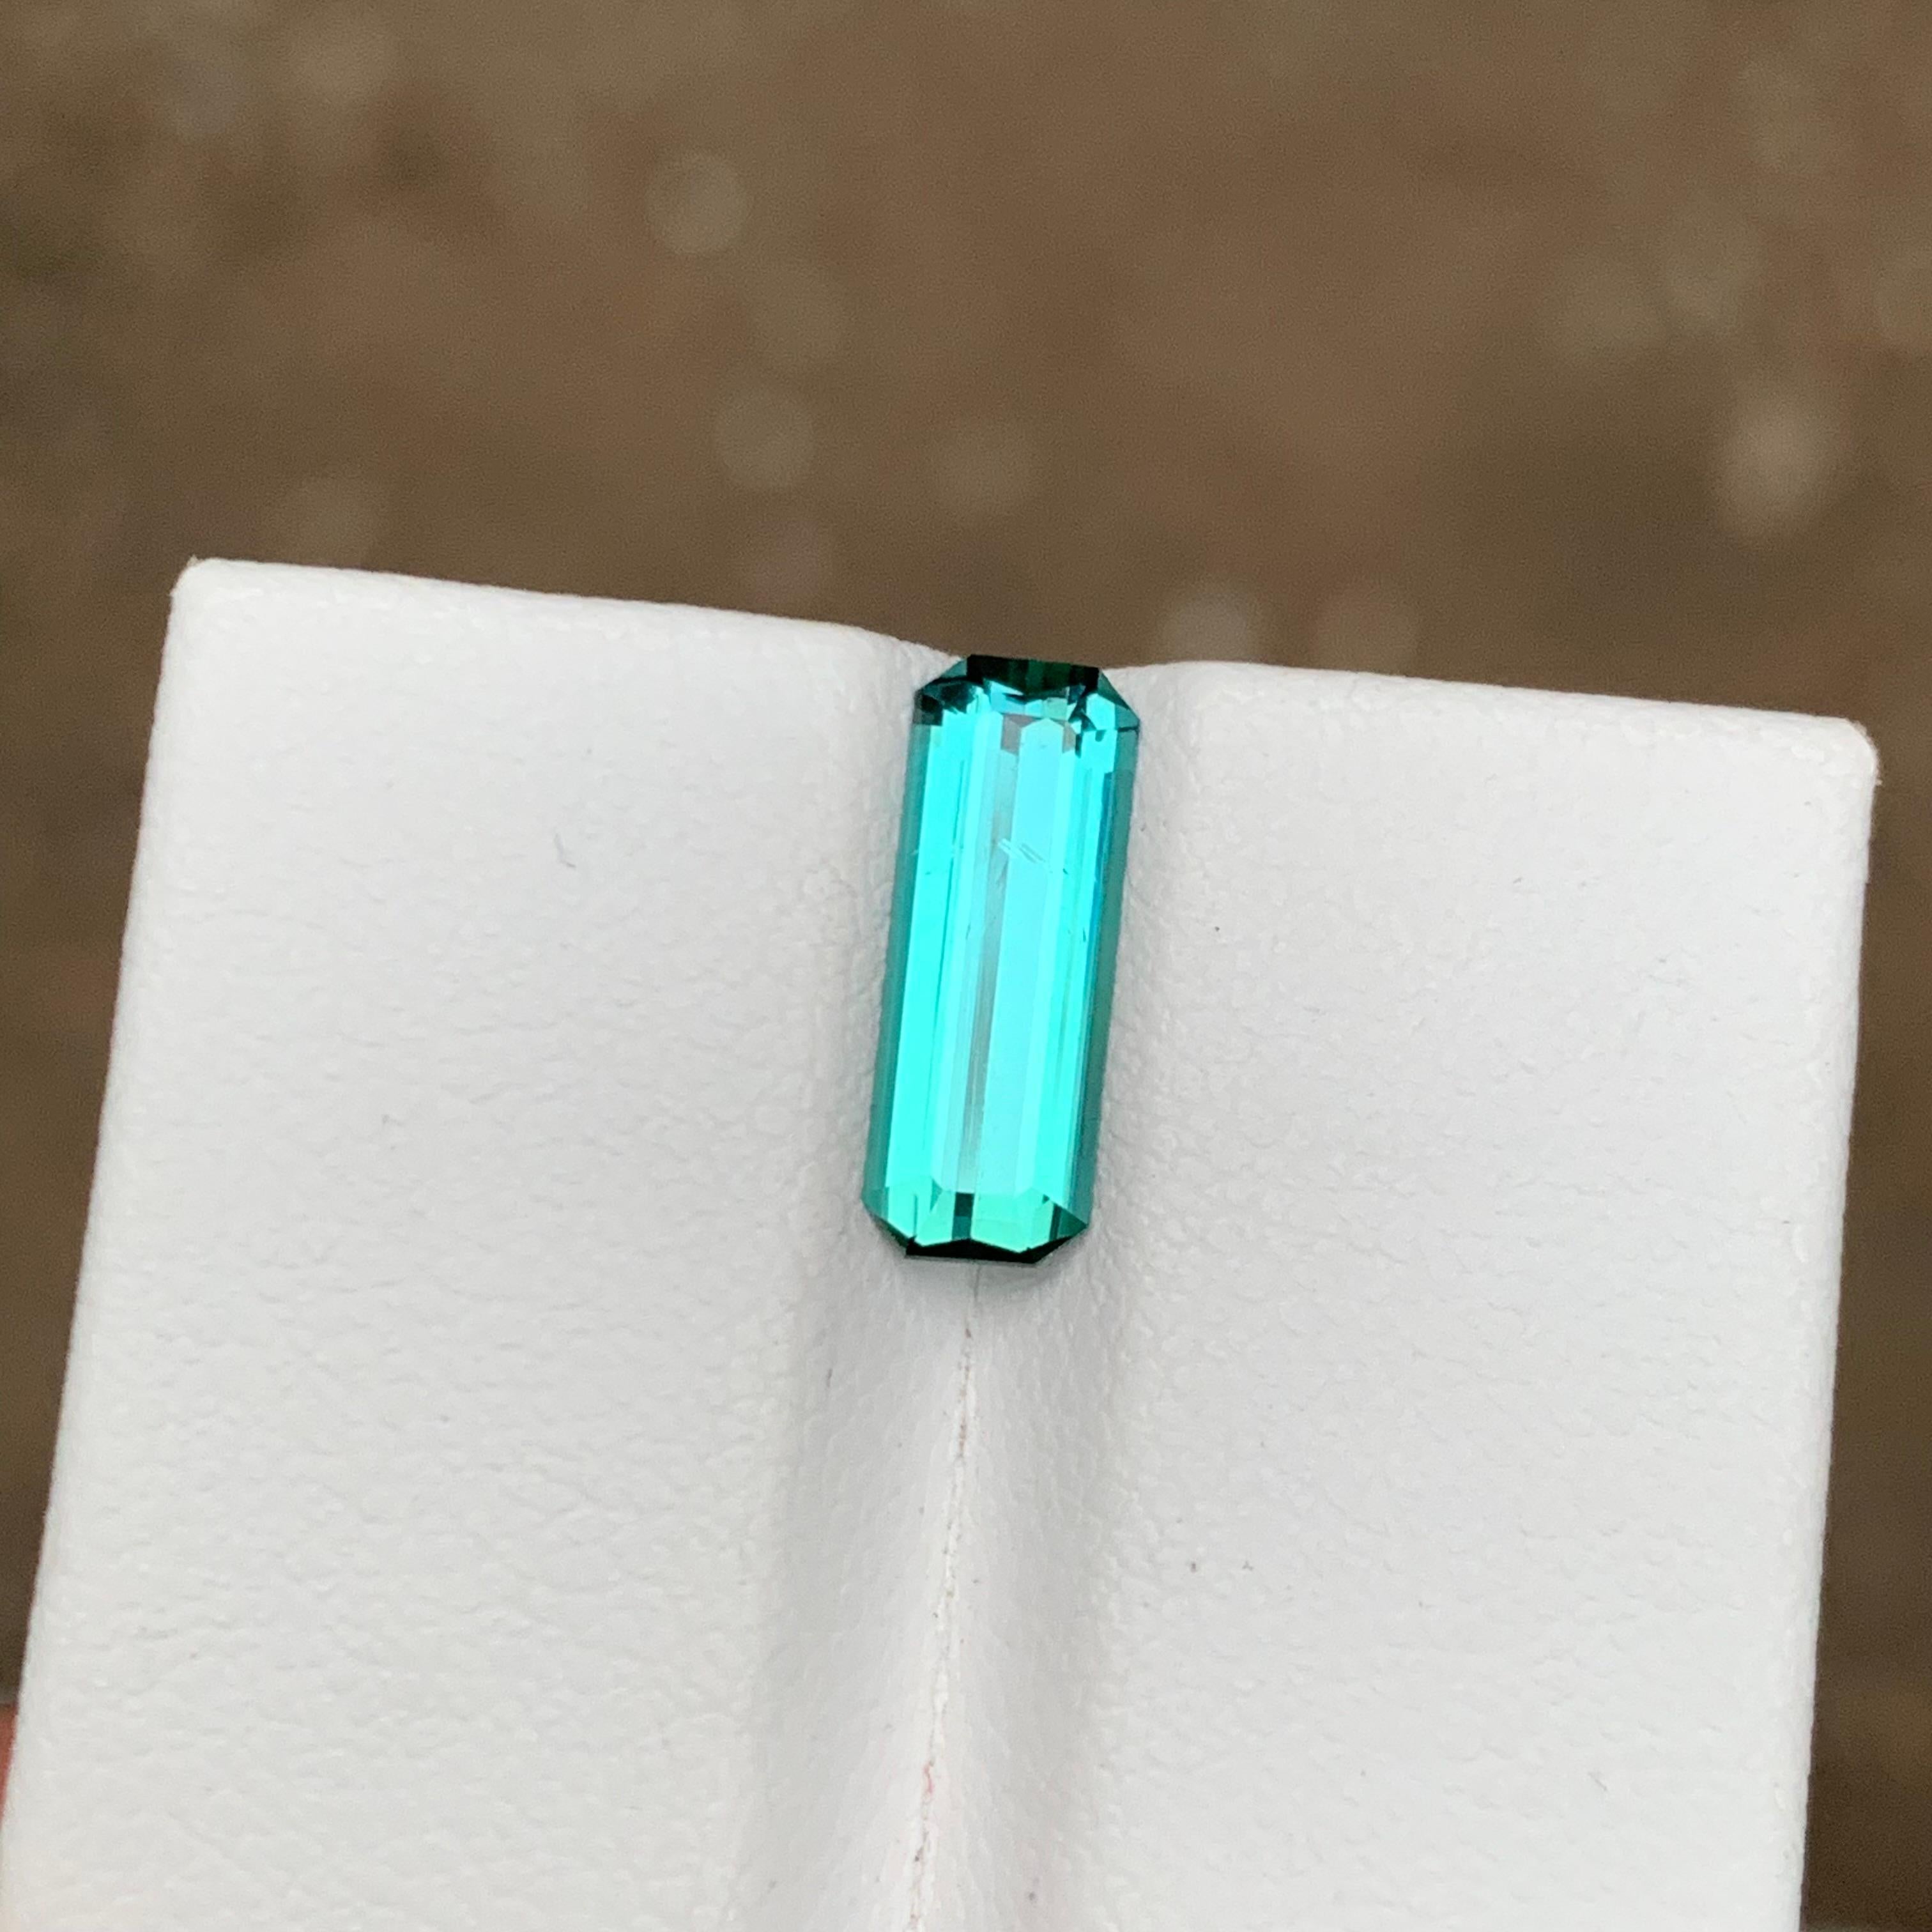 Rare Vivid Neon Bluish Green Hue Tourmaline Gemstone 1.75Ct Emerald Cut for Ring For Sale 5